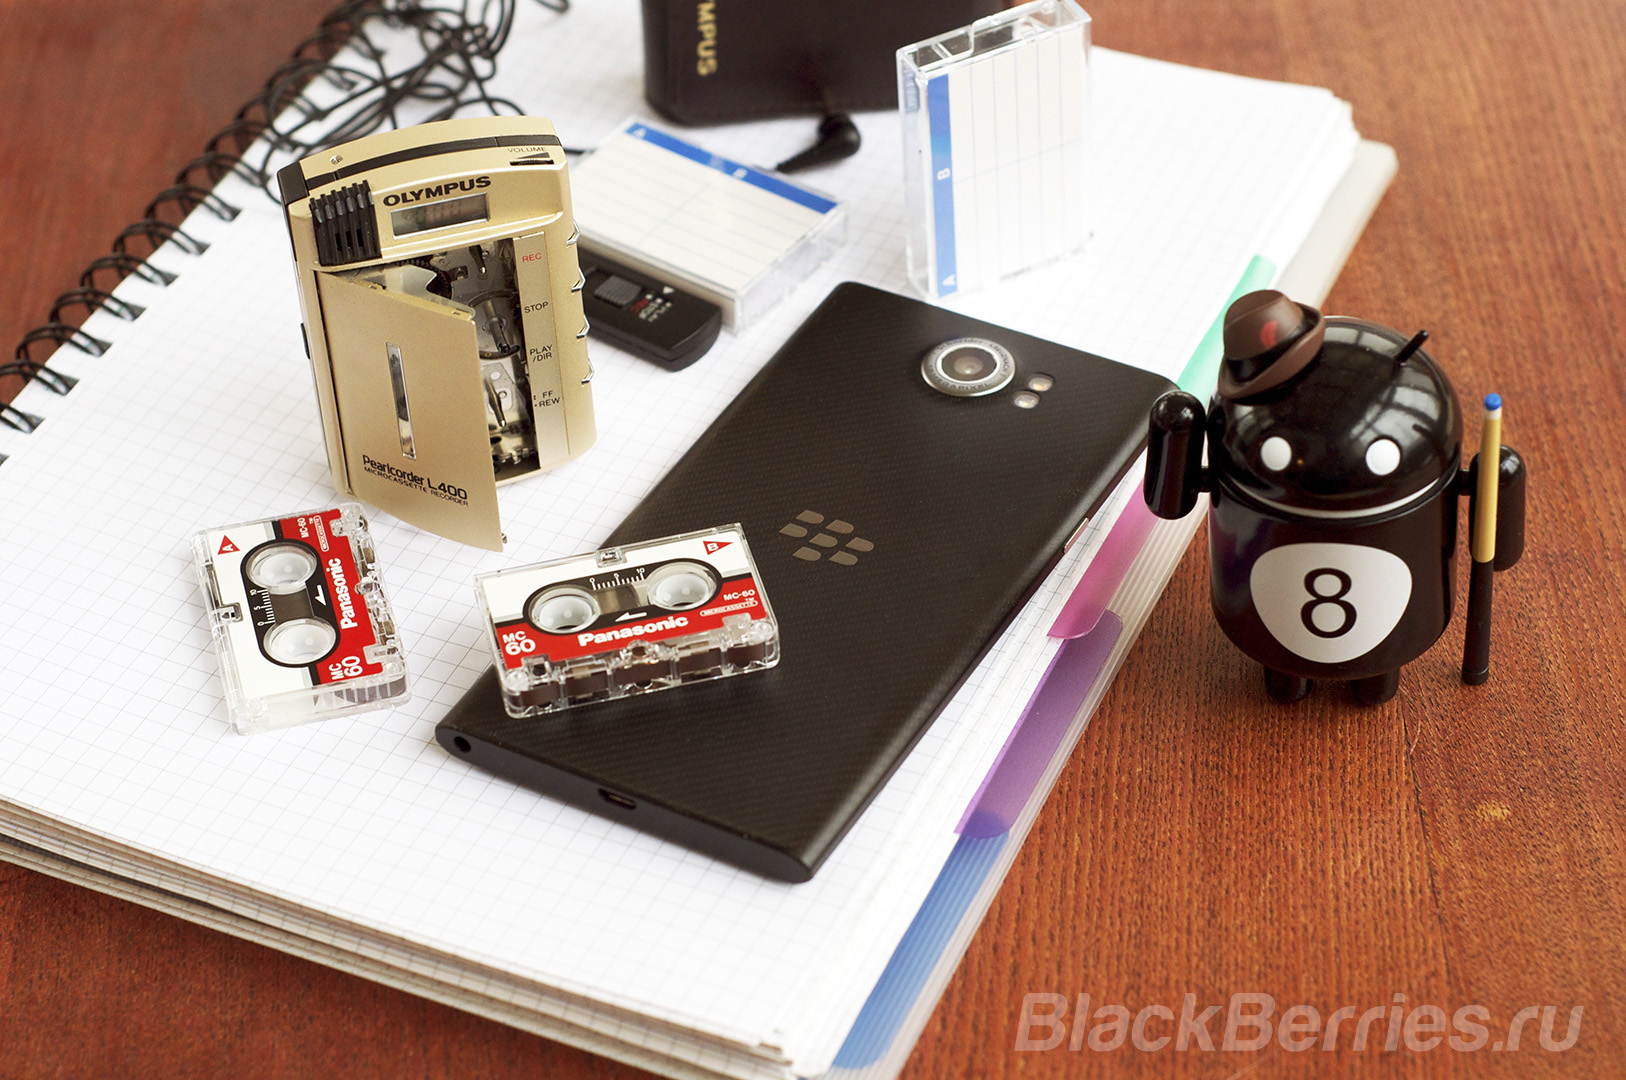 BlackBerry-Android-Recorder-15.jpg